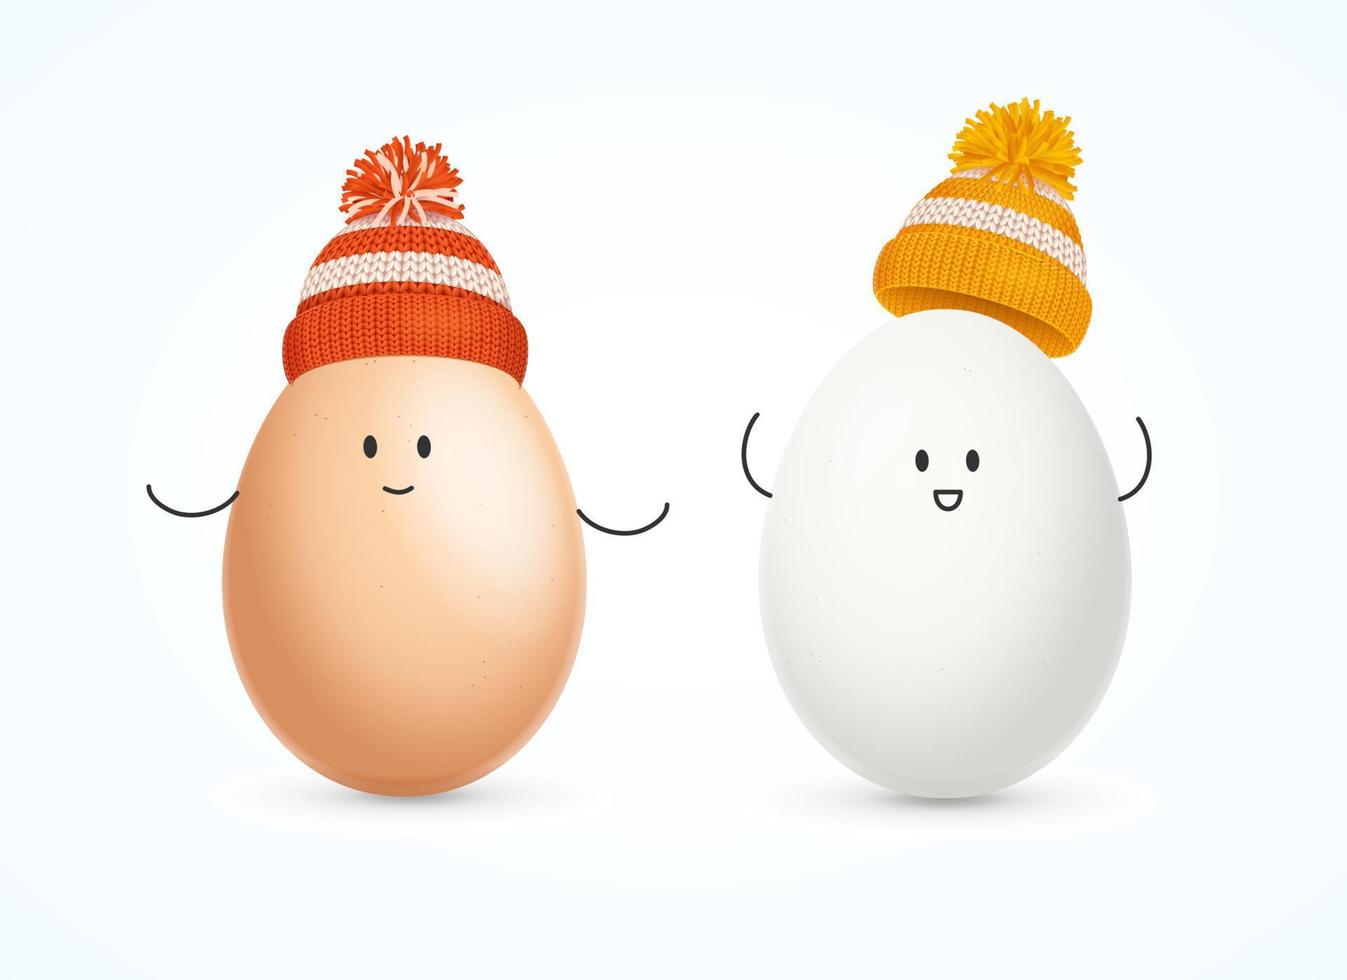 realista detallado 3d diferente contento Pascua de Resurrección huevo caracteres kawaii colocar. vector